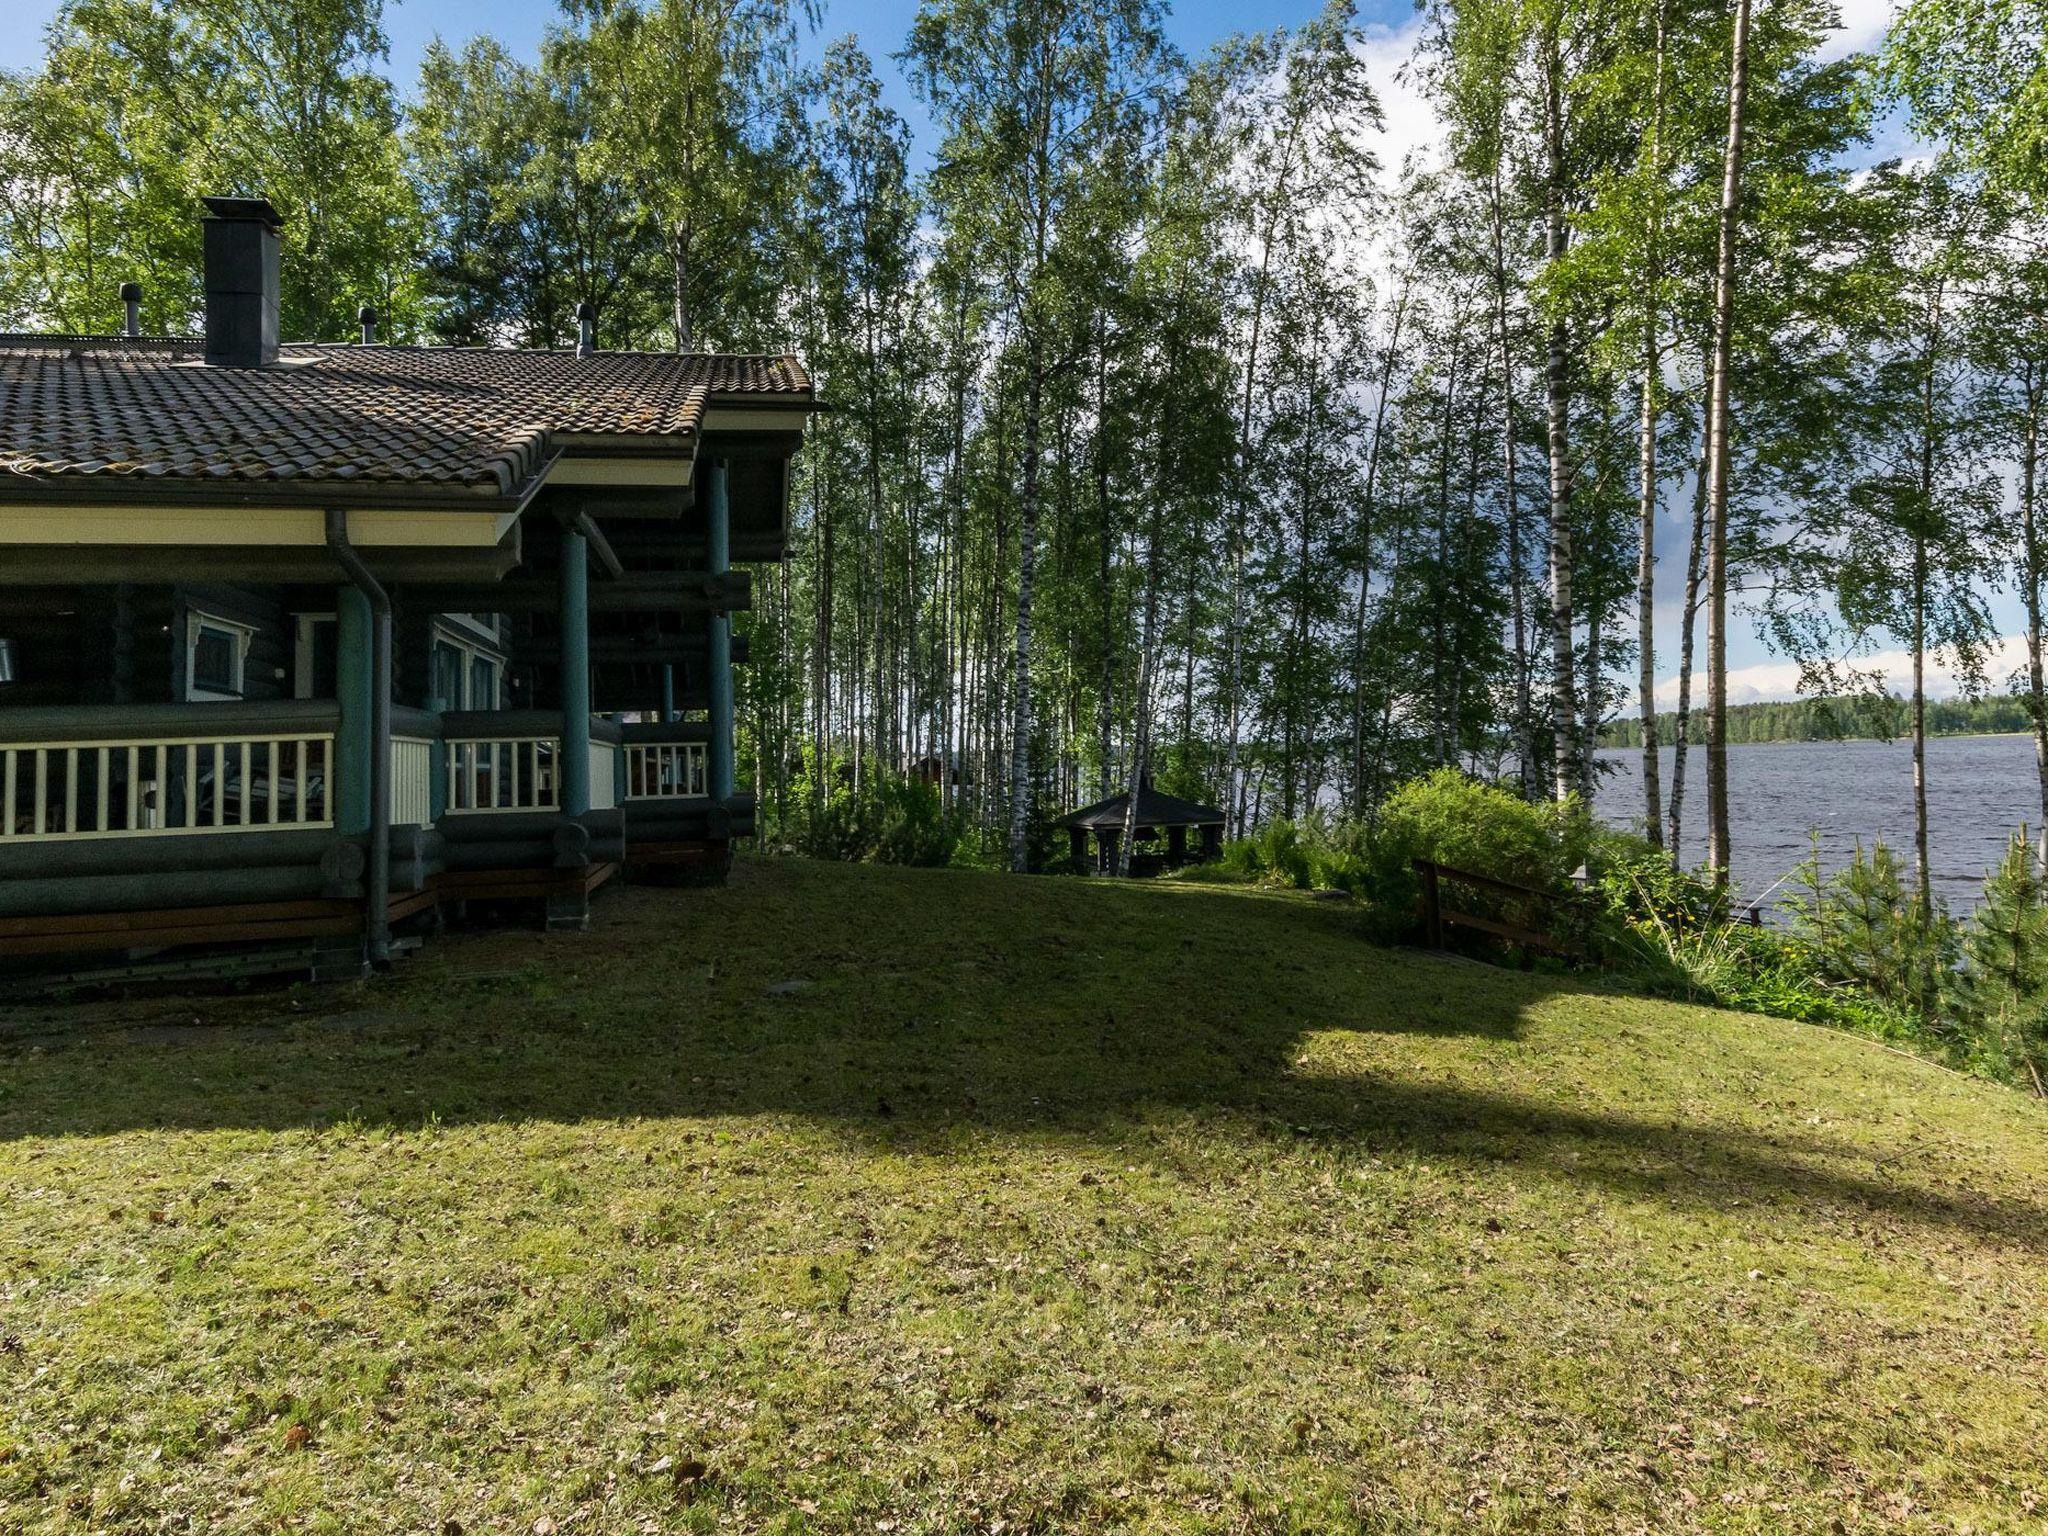 Photo 5 - 4 bedroom House in Mikkeli with sauna